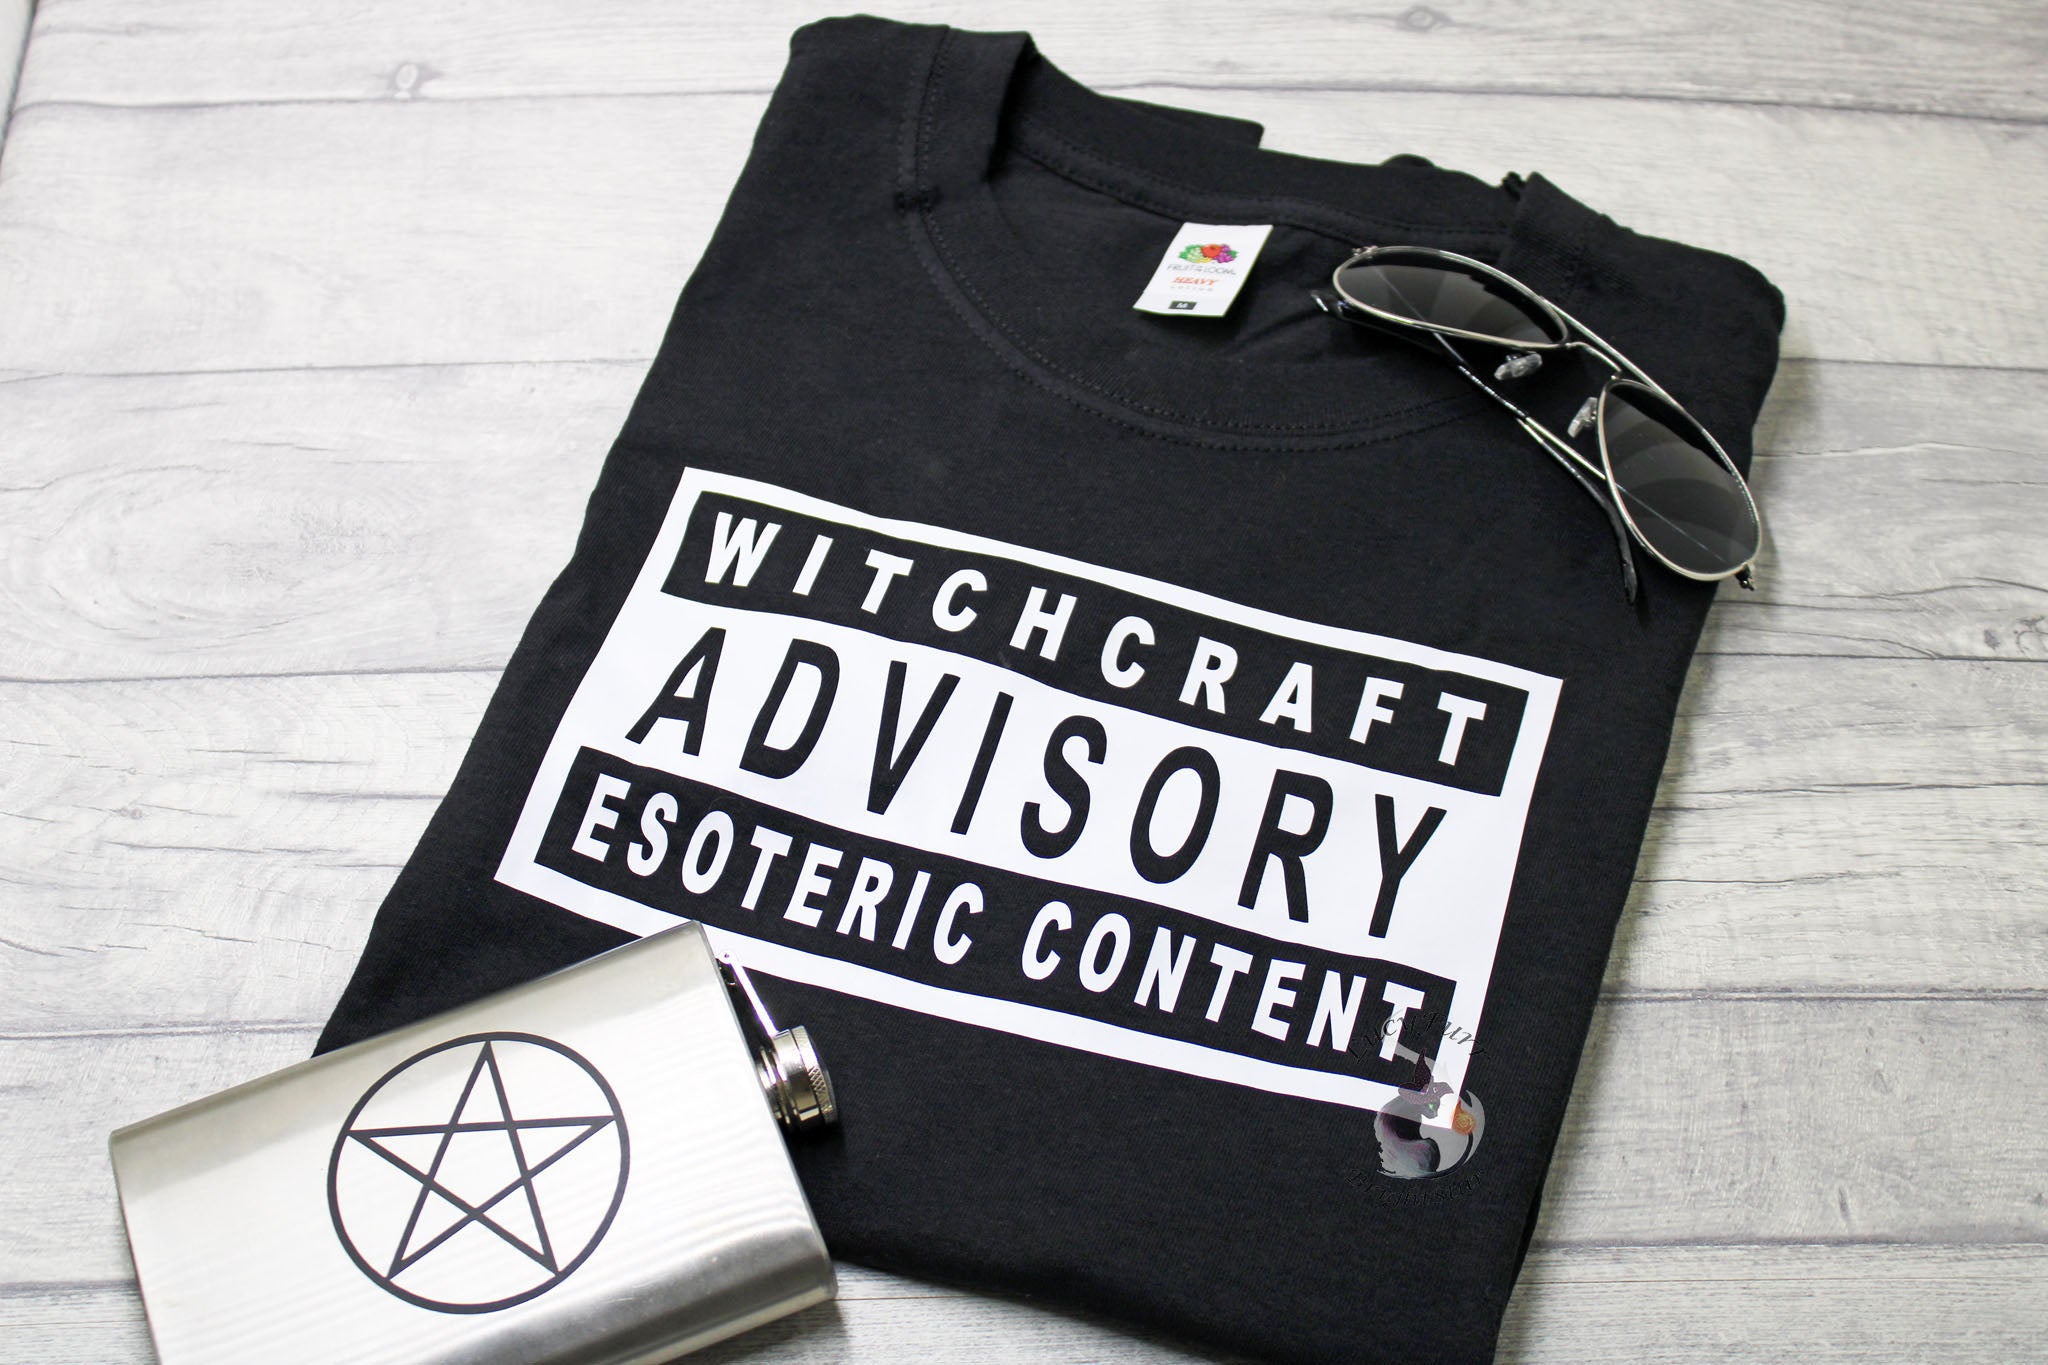 Witchcraft Advisory T-Shirt